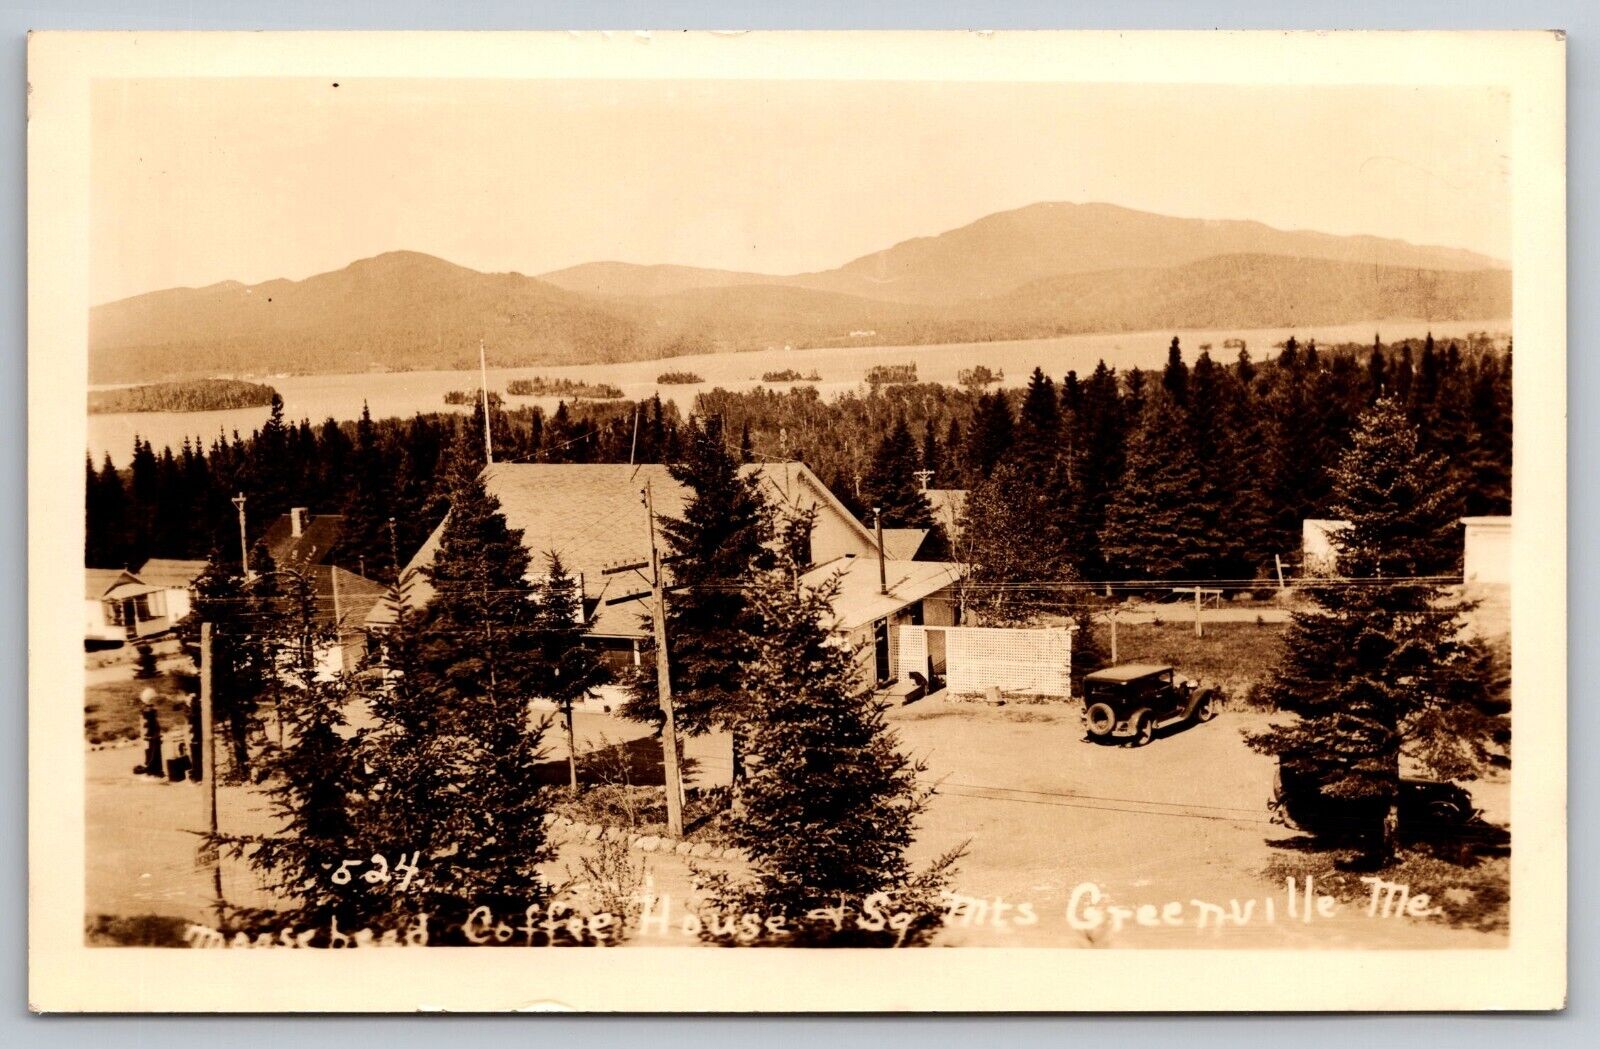 Moosehead Coffee House. Squaw Big Moose Mt. Greenville Real Photo Postcard RPPC